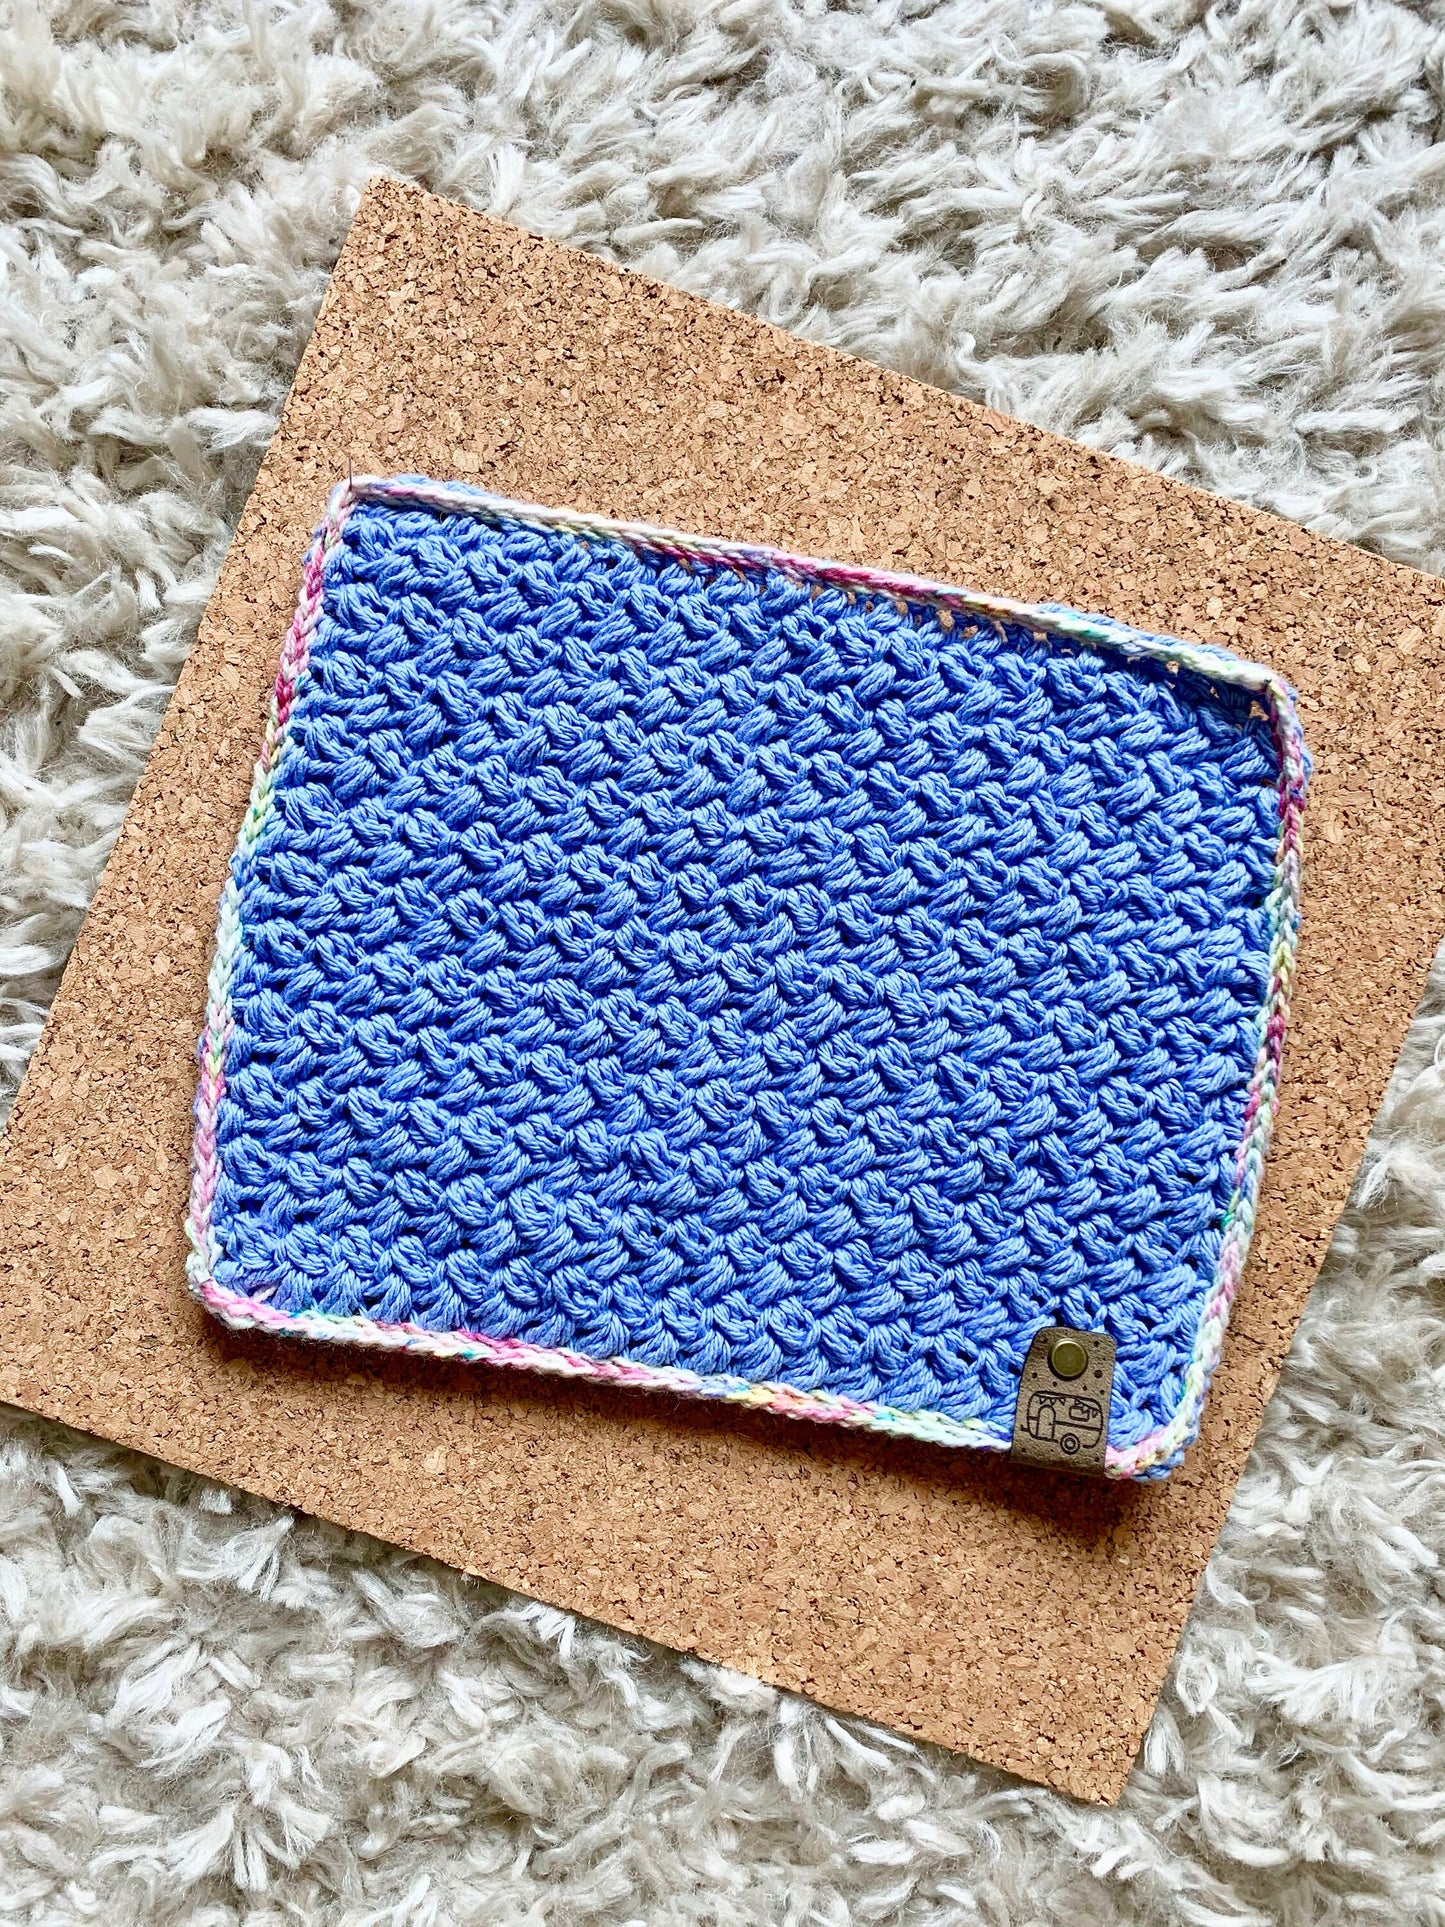 Crochet Pattern | The Switchback Dishcloth | Crochet Pattern | Easy Crochet Pattern | Crochet Dishcloth Pattern | Beginner Pattern